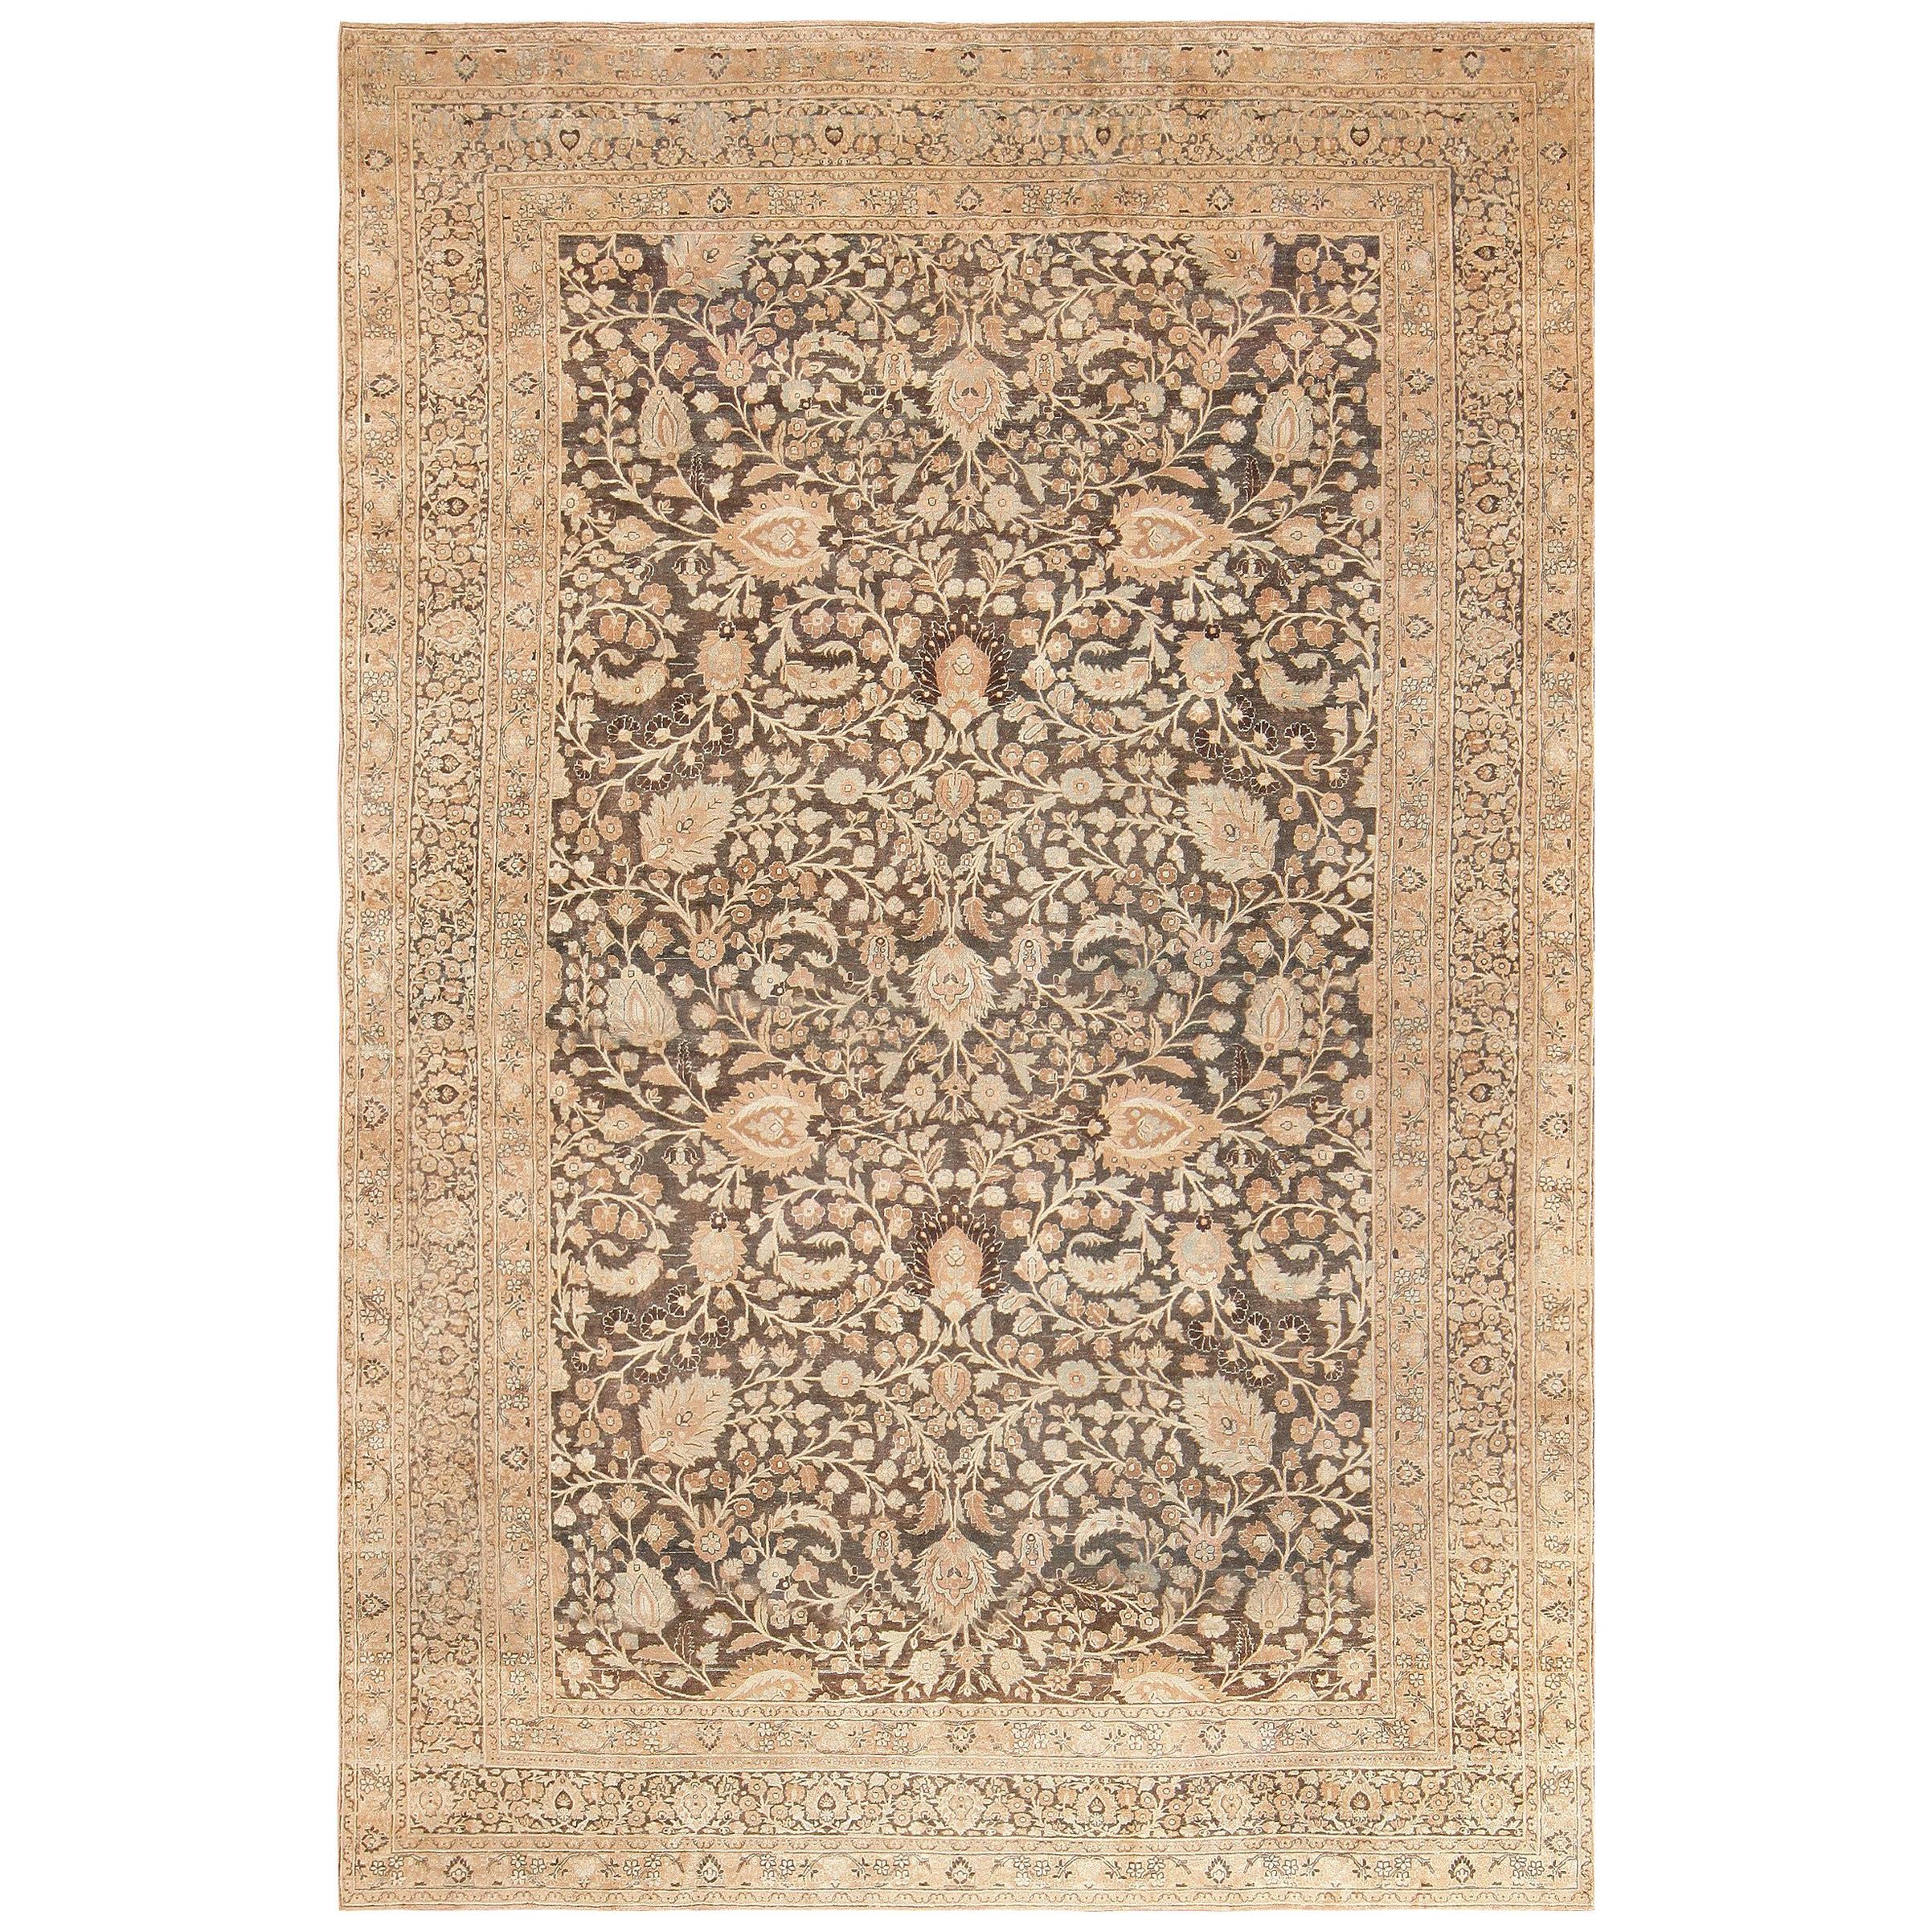 Antique Persian Khorassan Carpet. Size: 12 ft x 17 ft 6 in For Sale